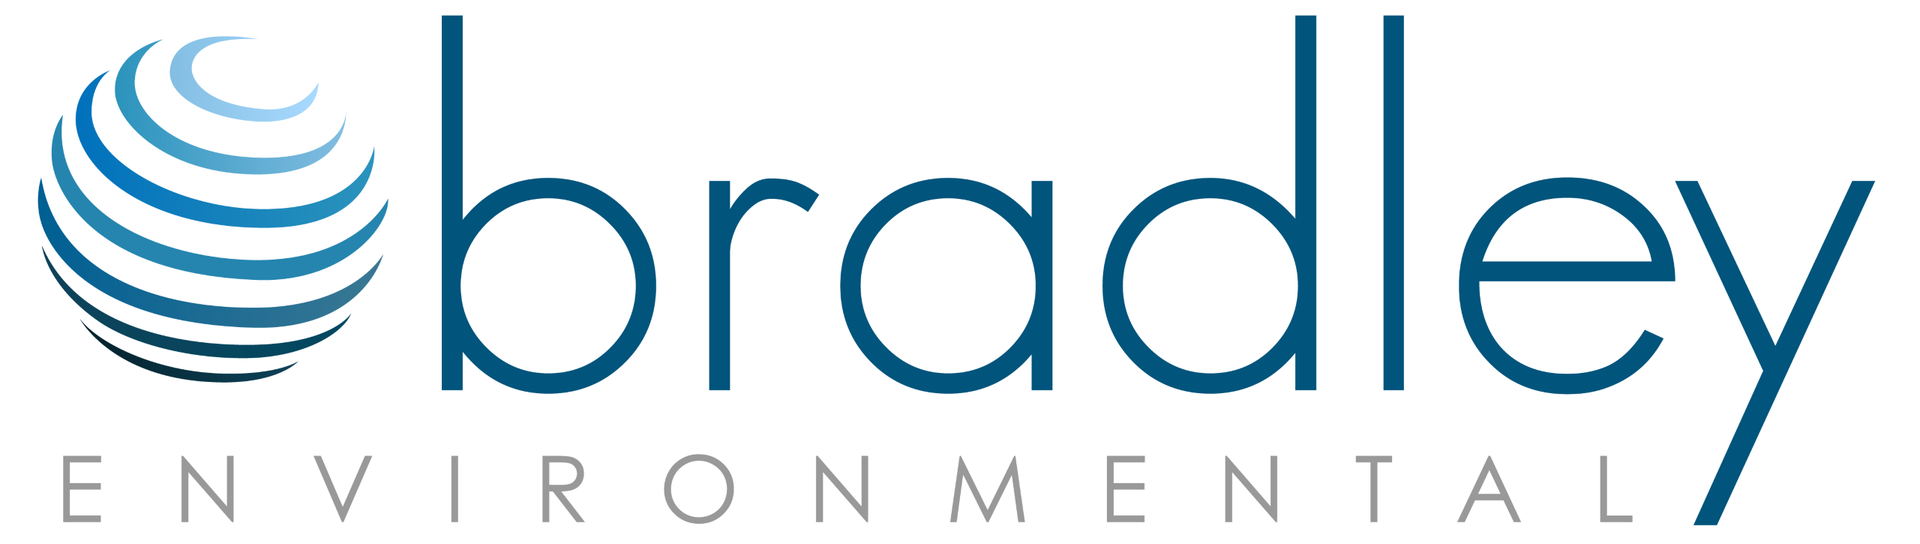 logo for Bradley Environmental Consultants Limited